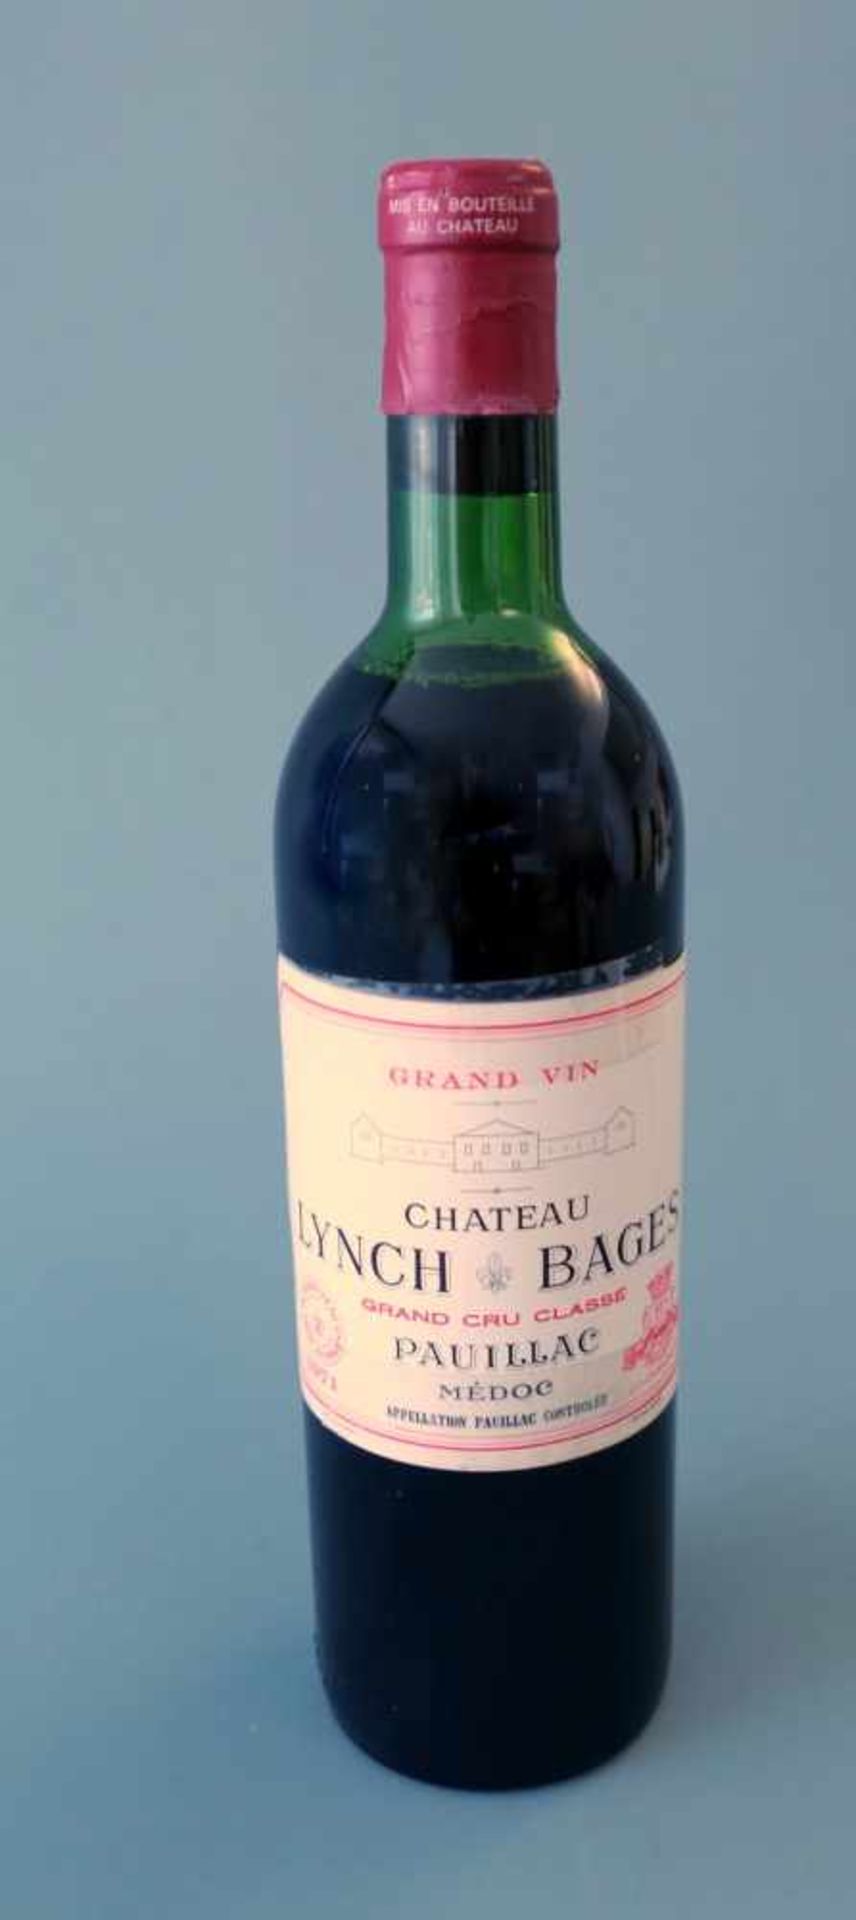 Chateau Lynch BagesGrand Cru Classé, Jahrgang 1971, Inhalt 750 ml. Pauillac, Bordeaux,